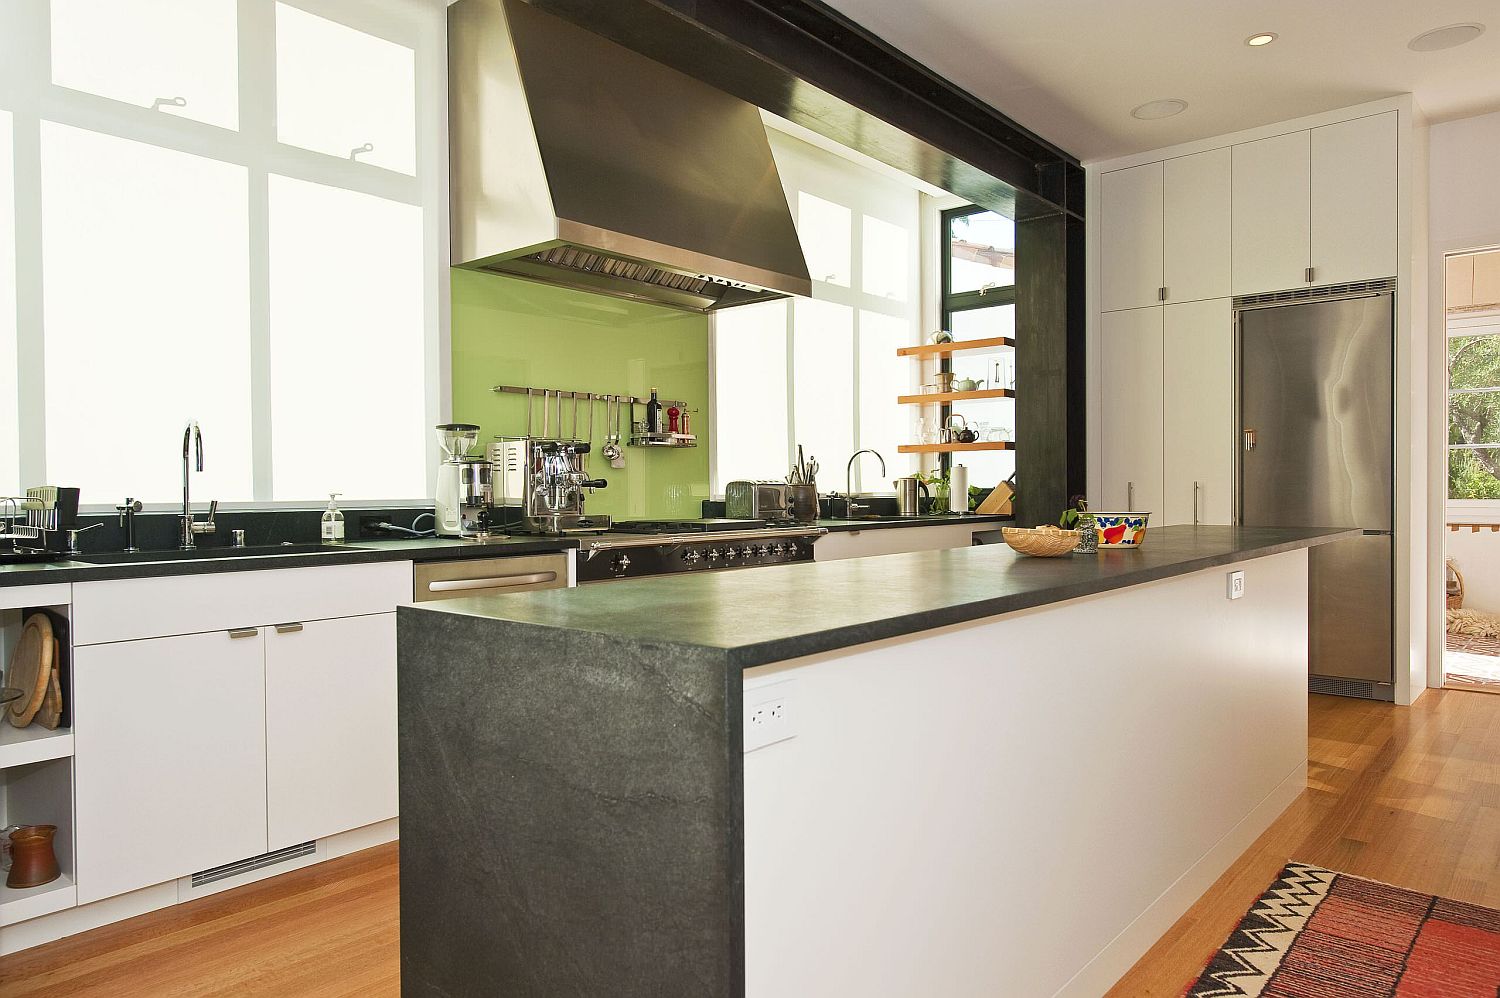 Back-painted glass backsplash in green for the modern white kitchen